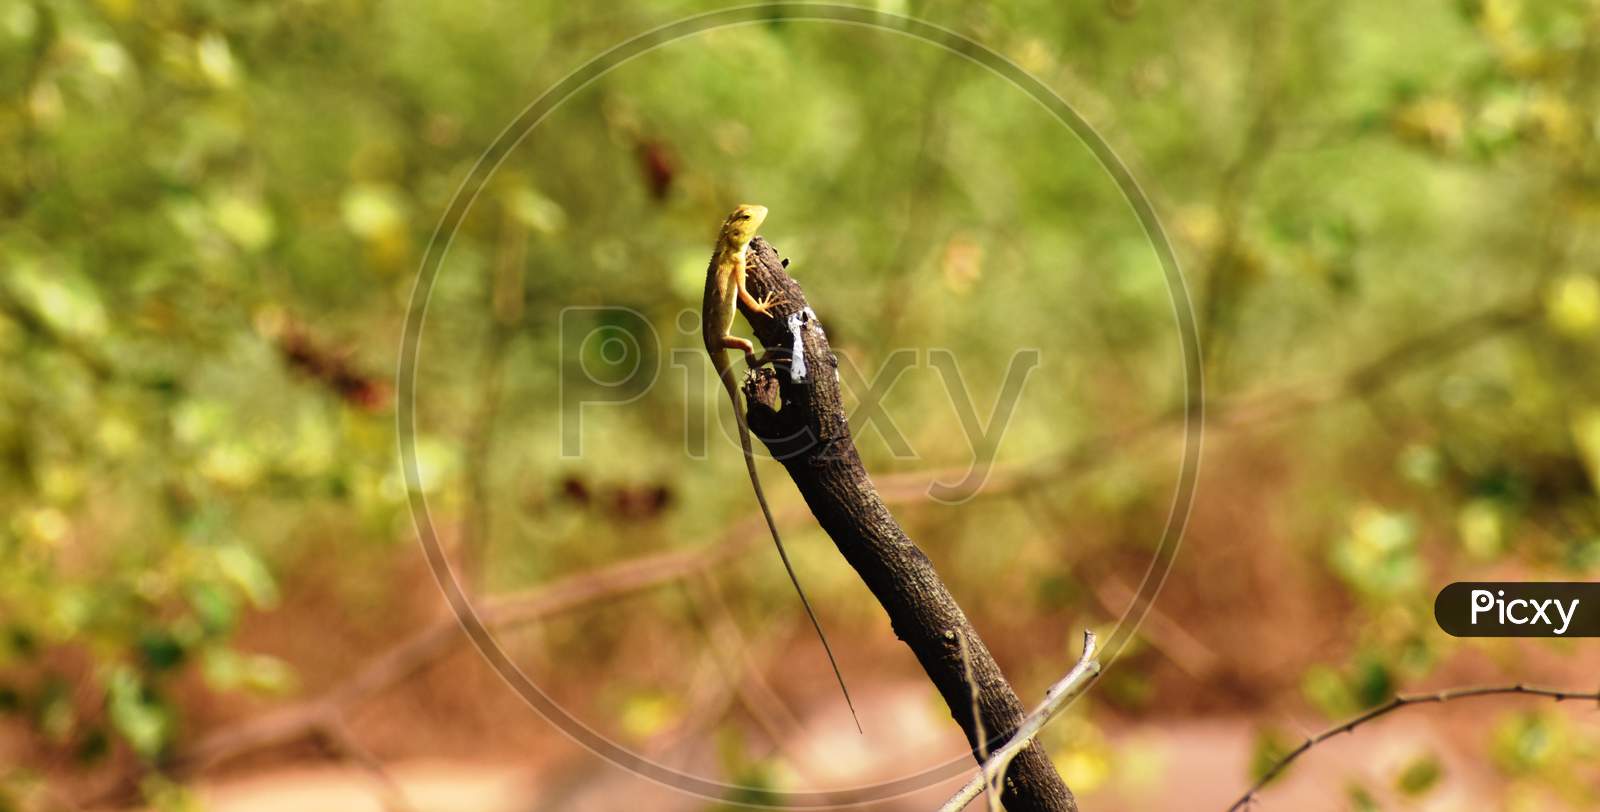 Oriental garden lizard or Calotes versicolor on the dry branch.